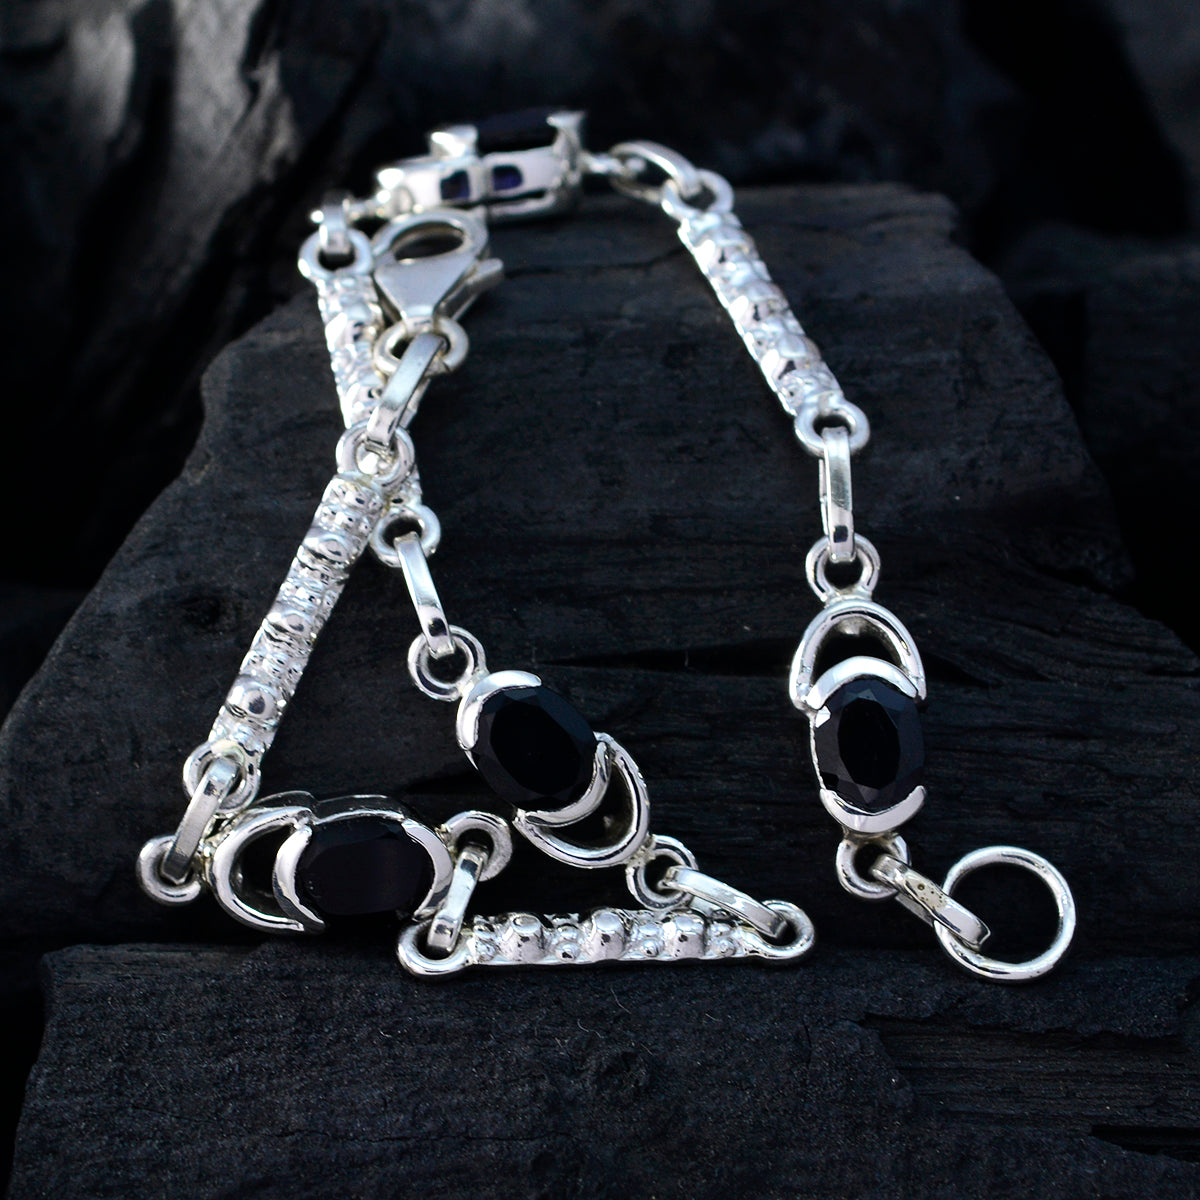 Riyo Good Gemstones Oval Faceted Black Black Onyx Silver Bracelet gift for halloween